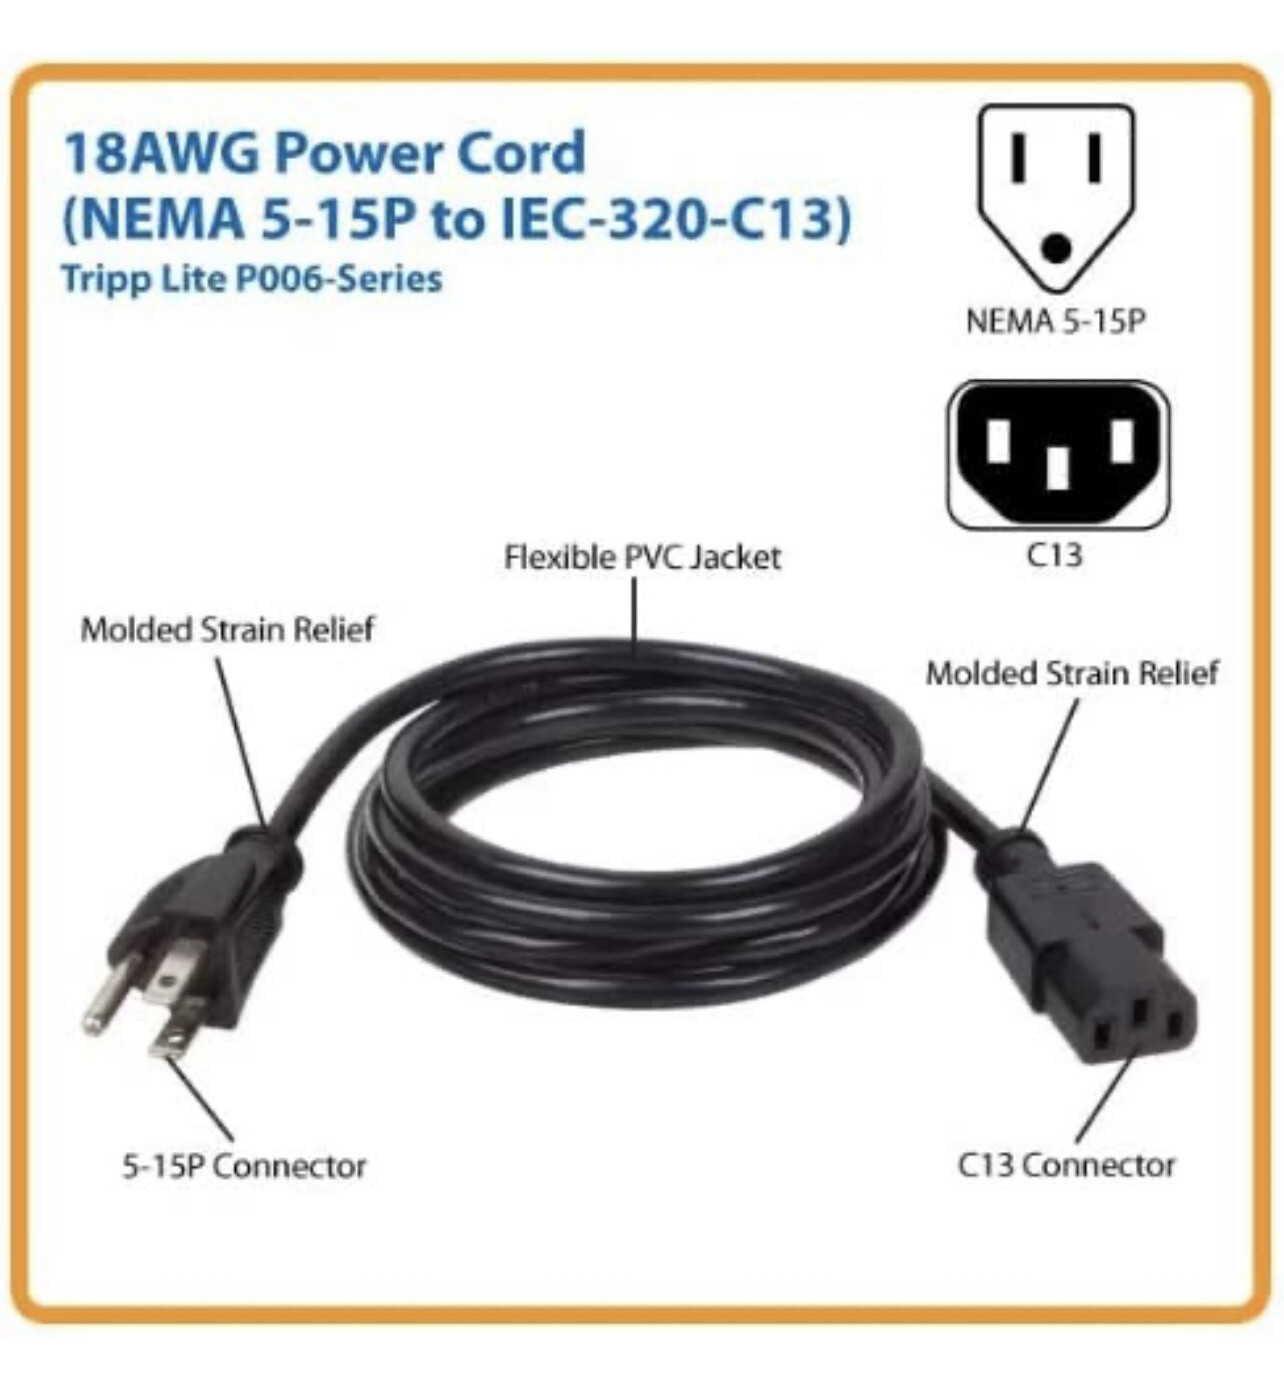 Tripp Lite Power Cord 3ft 5-15